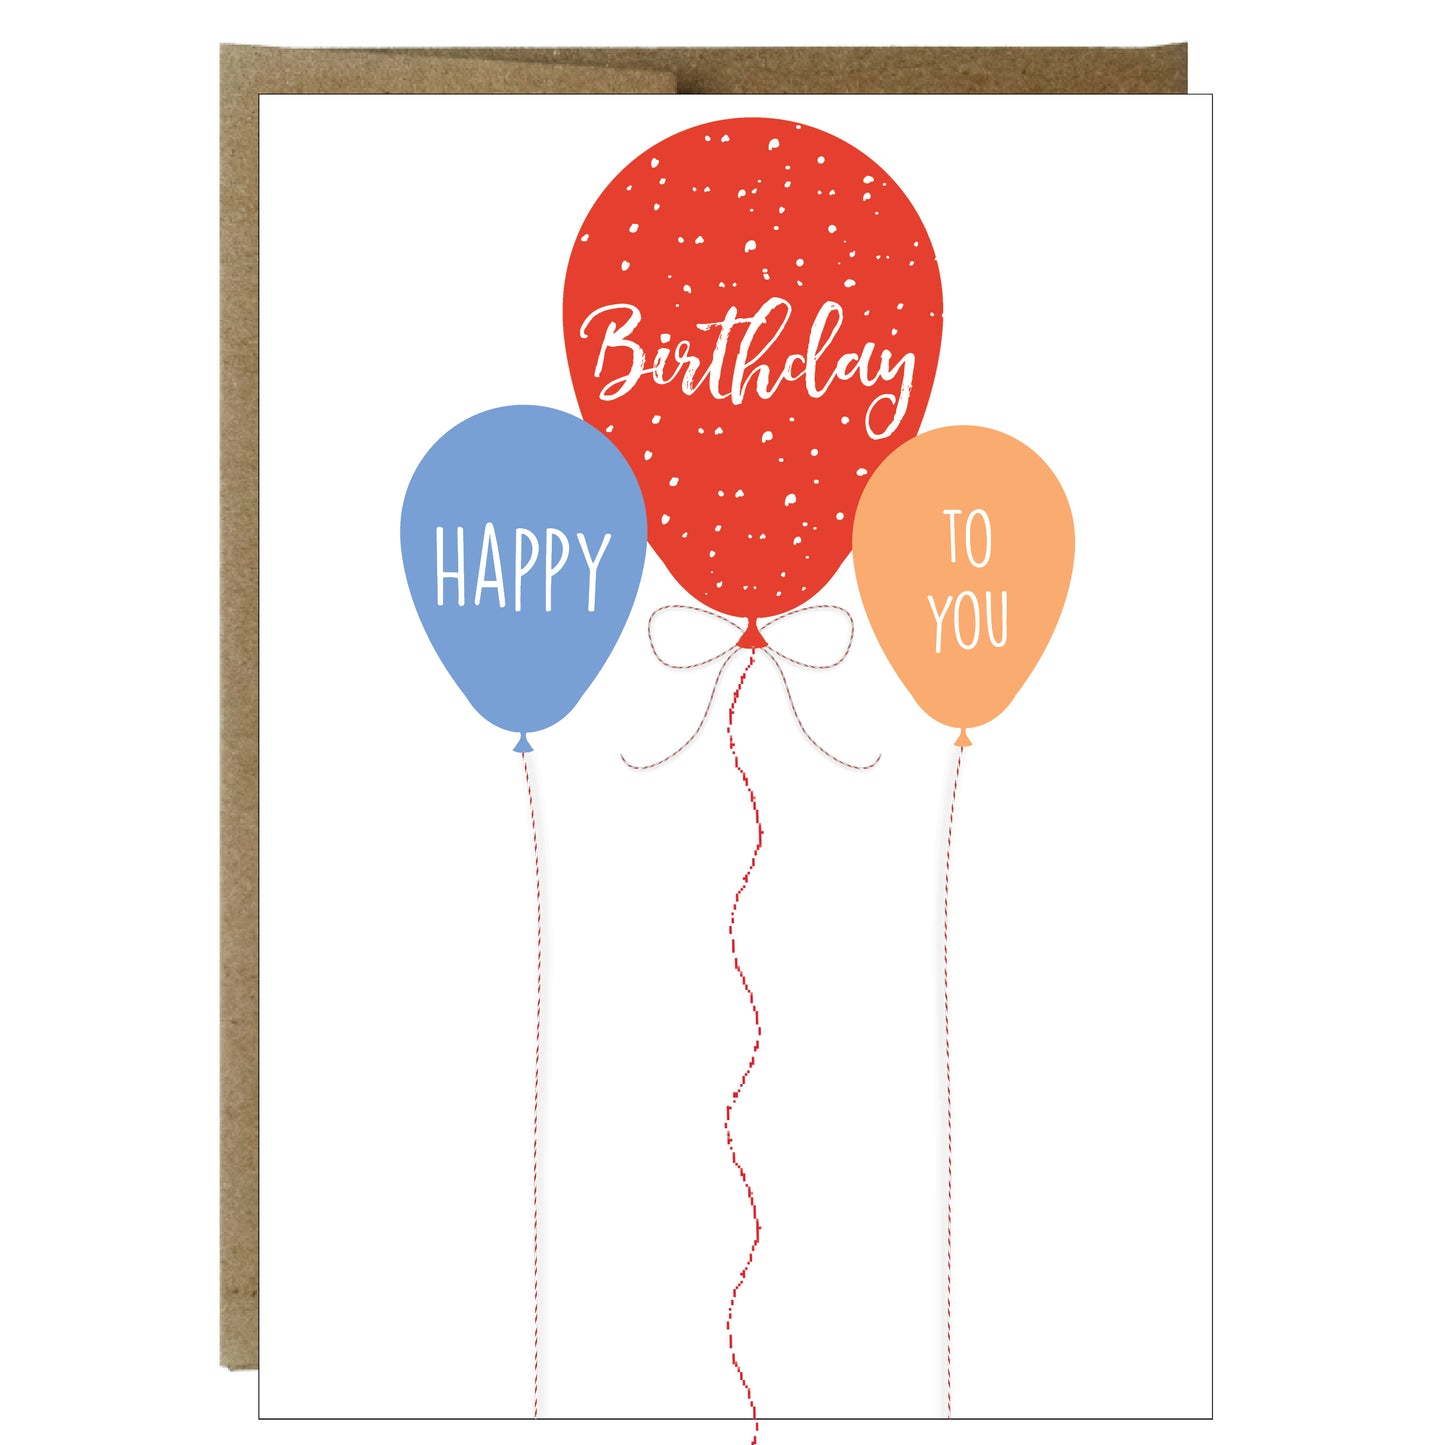 Happy Birthday Balloons Card with sewn paper - Idea Chíc